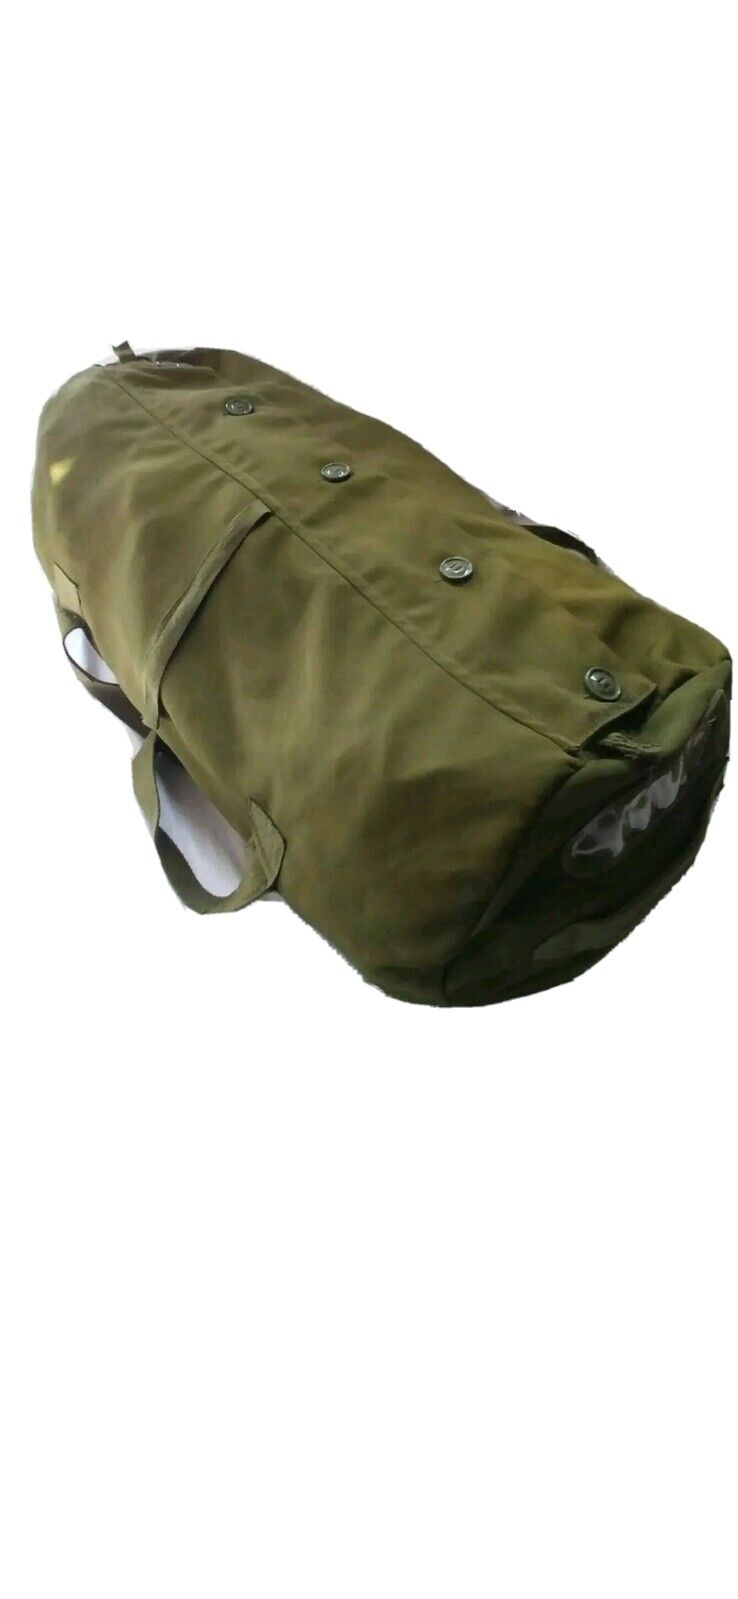 Canadian Army Duffle Bag